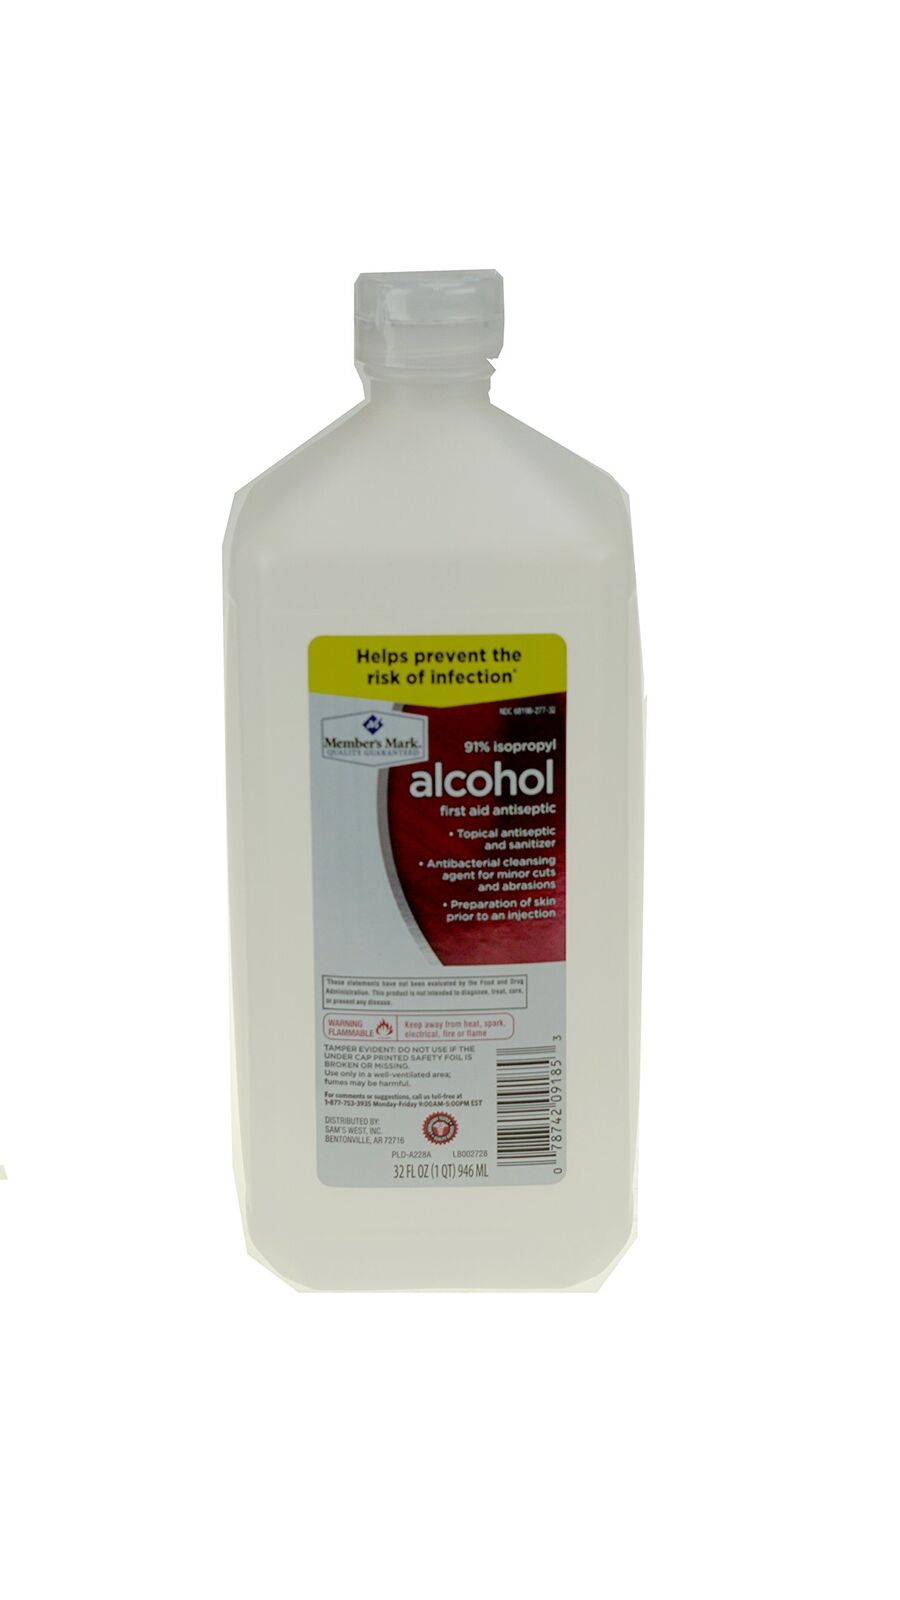 91% Isopropyl Alcohol 32 fl oz bottle (1 bottle)